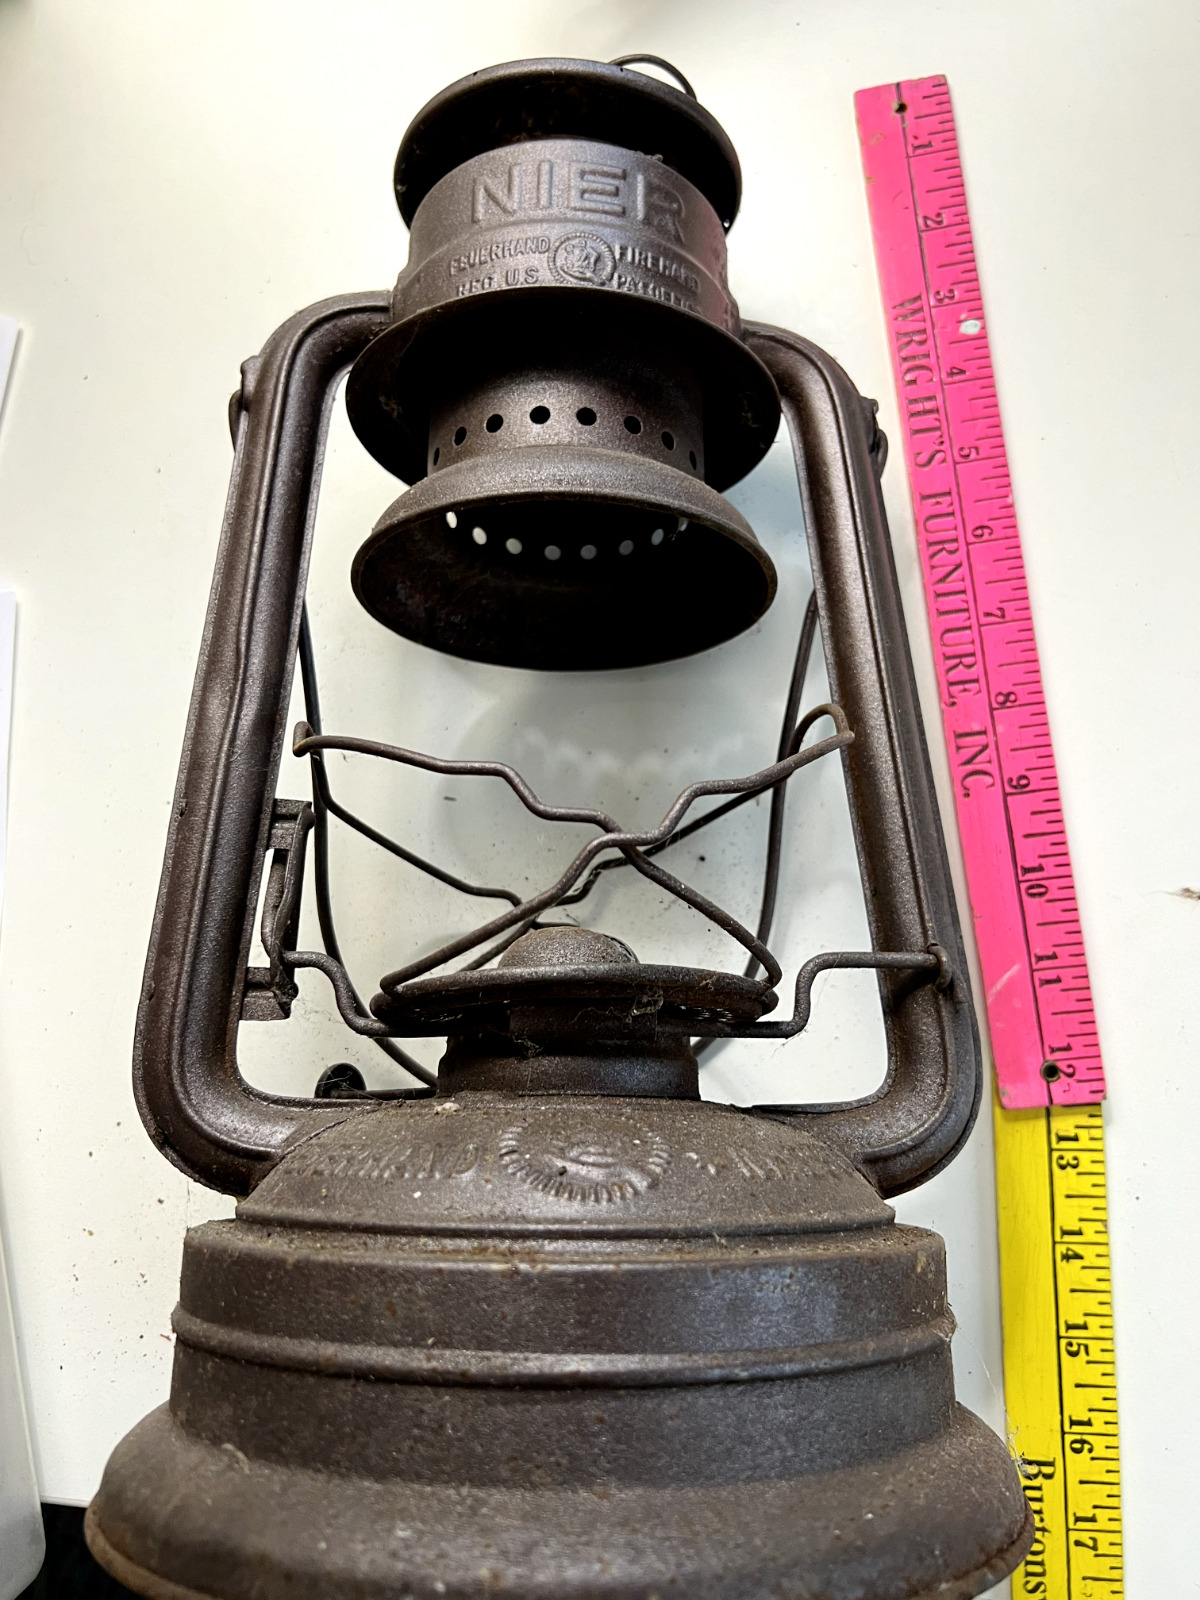 Vintage Antique Lantern, NIER NO 280, FEUERHAND, Firehand, Kerosene, Primitive